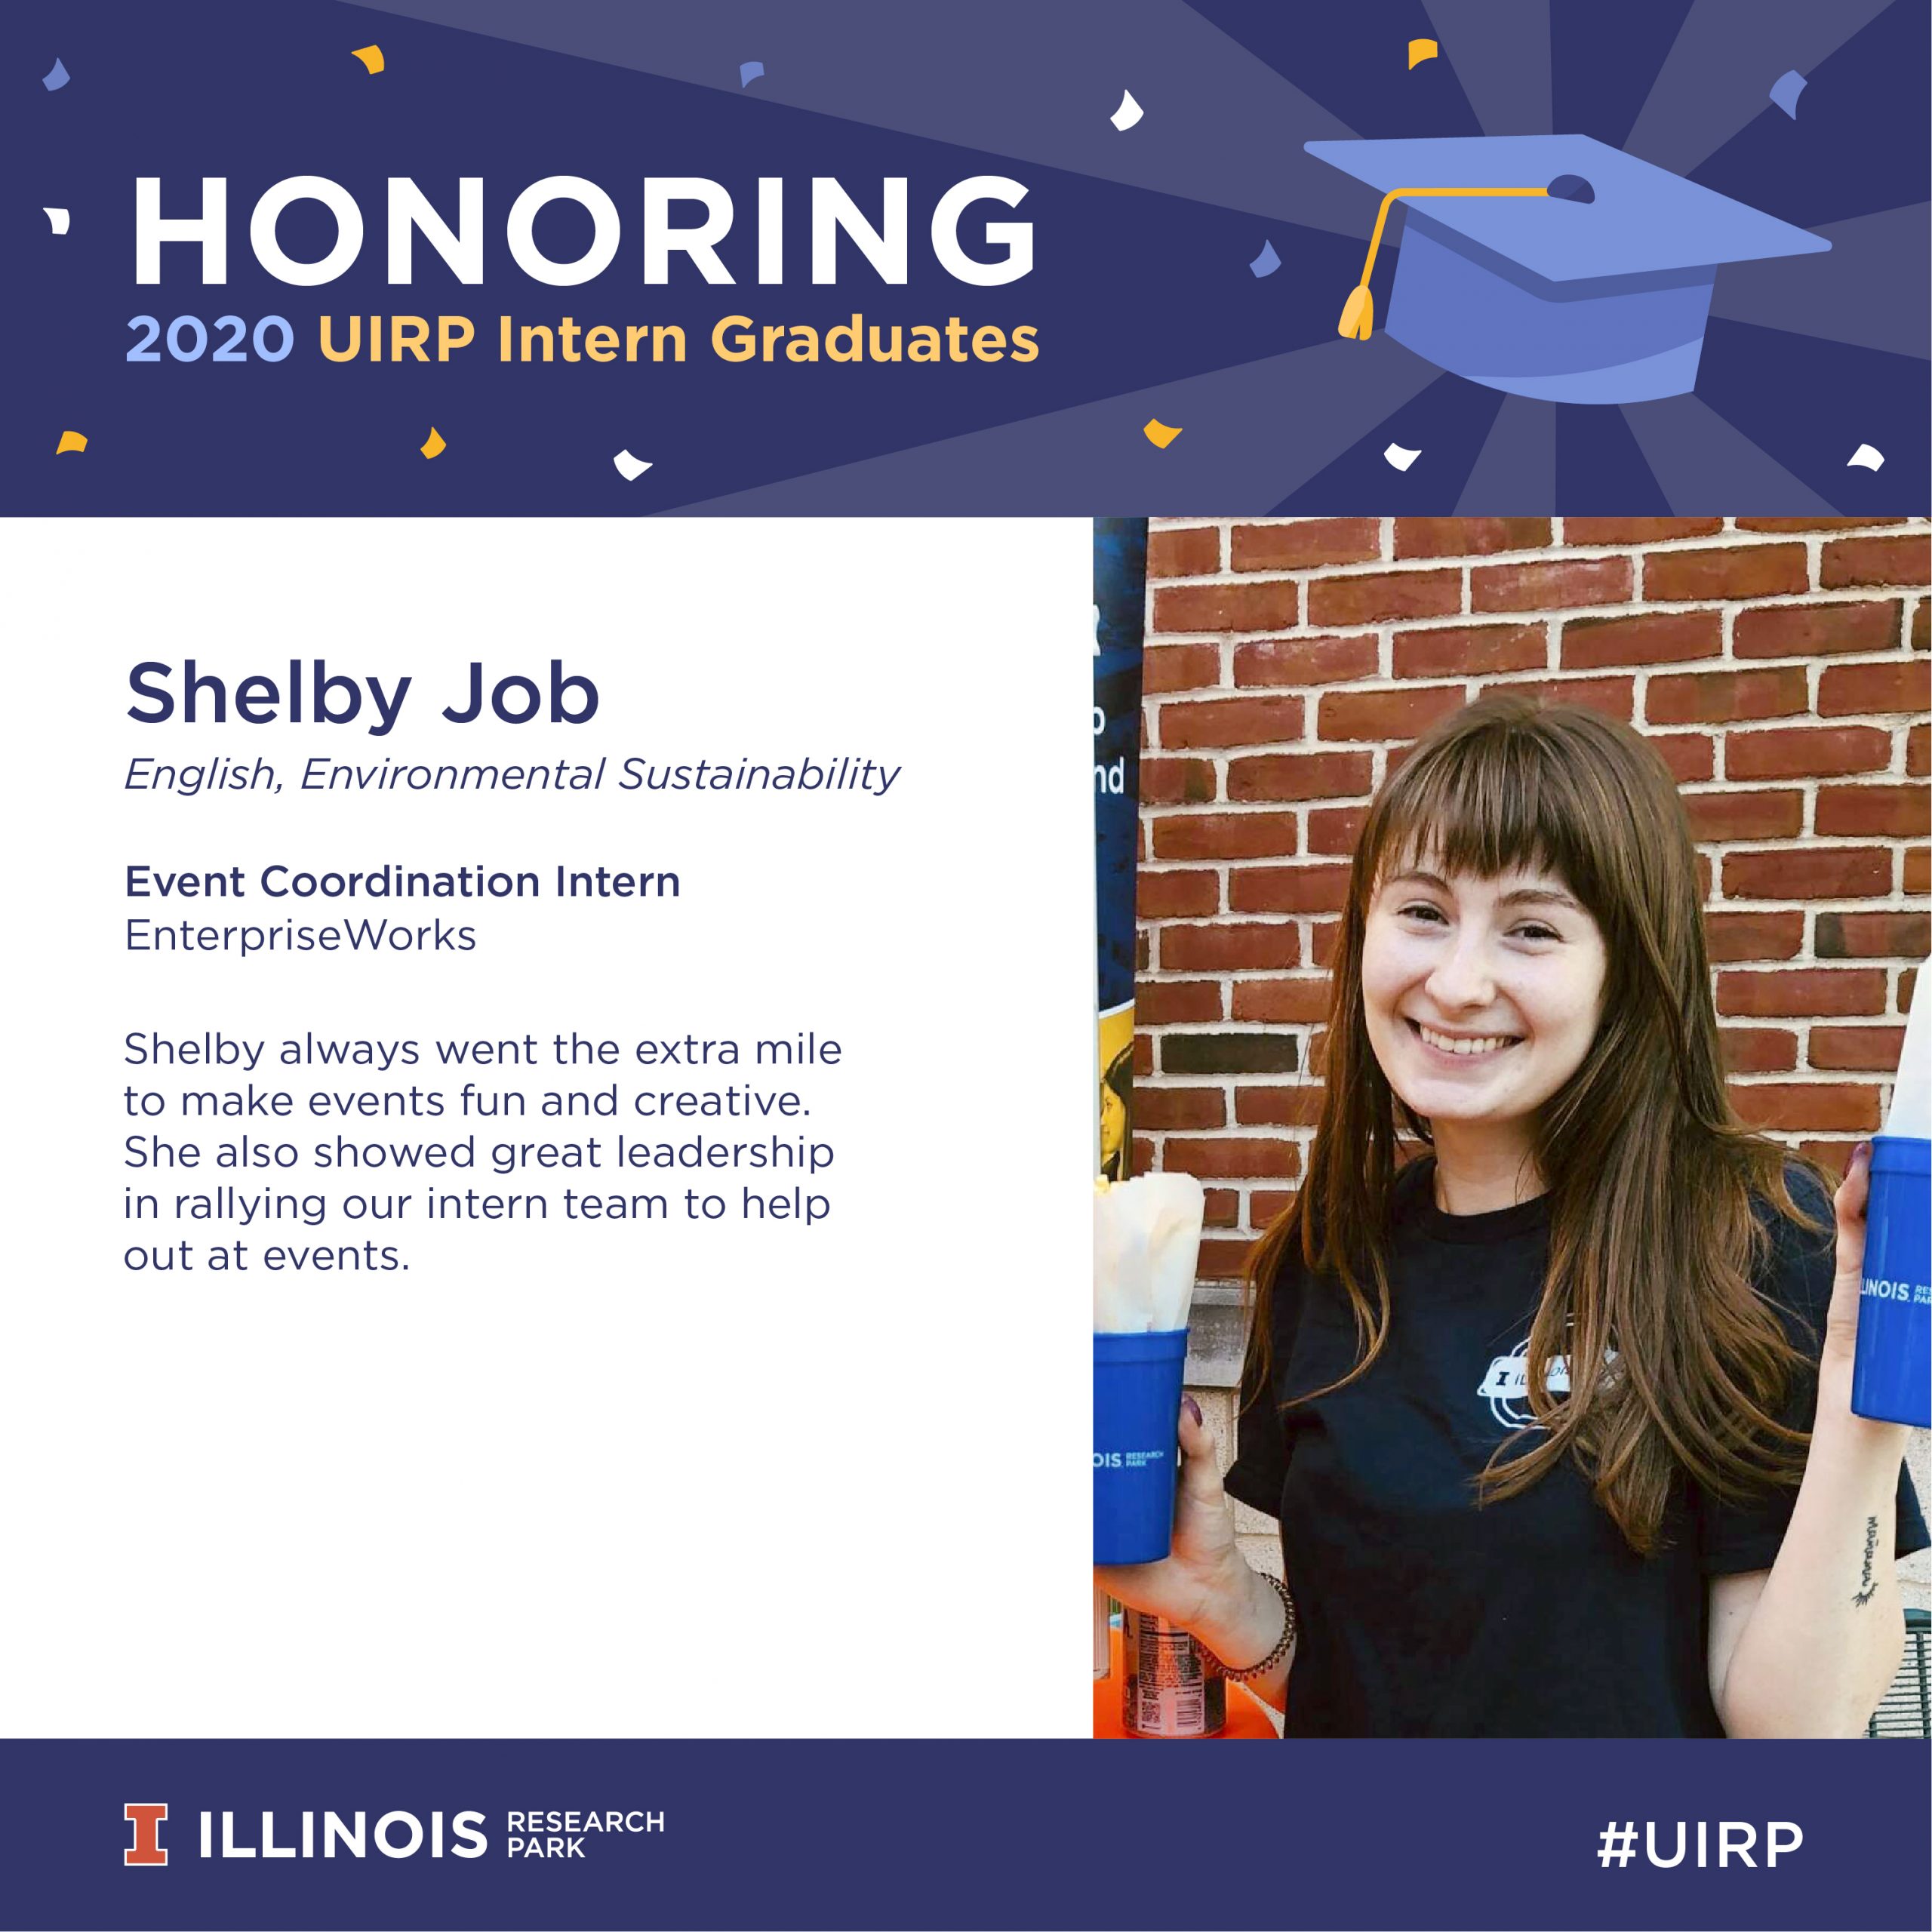 Shelby Job, Event Coordination Intern at EnterpriseWorks